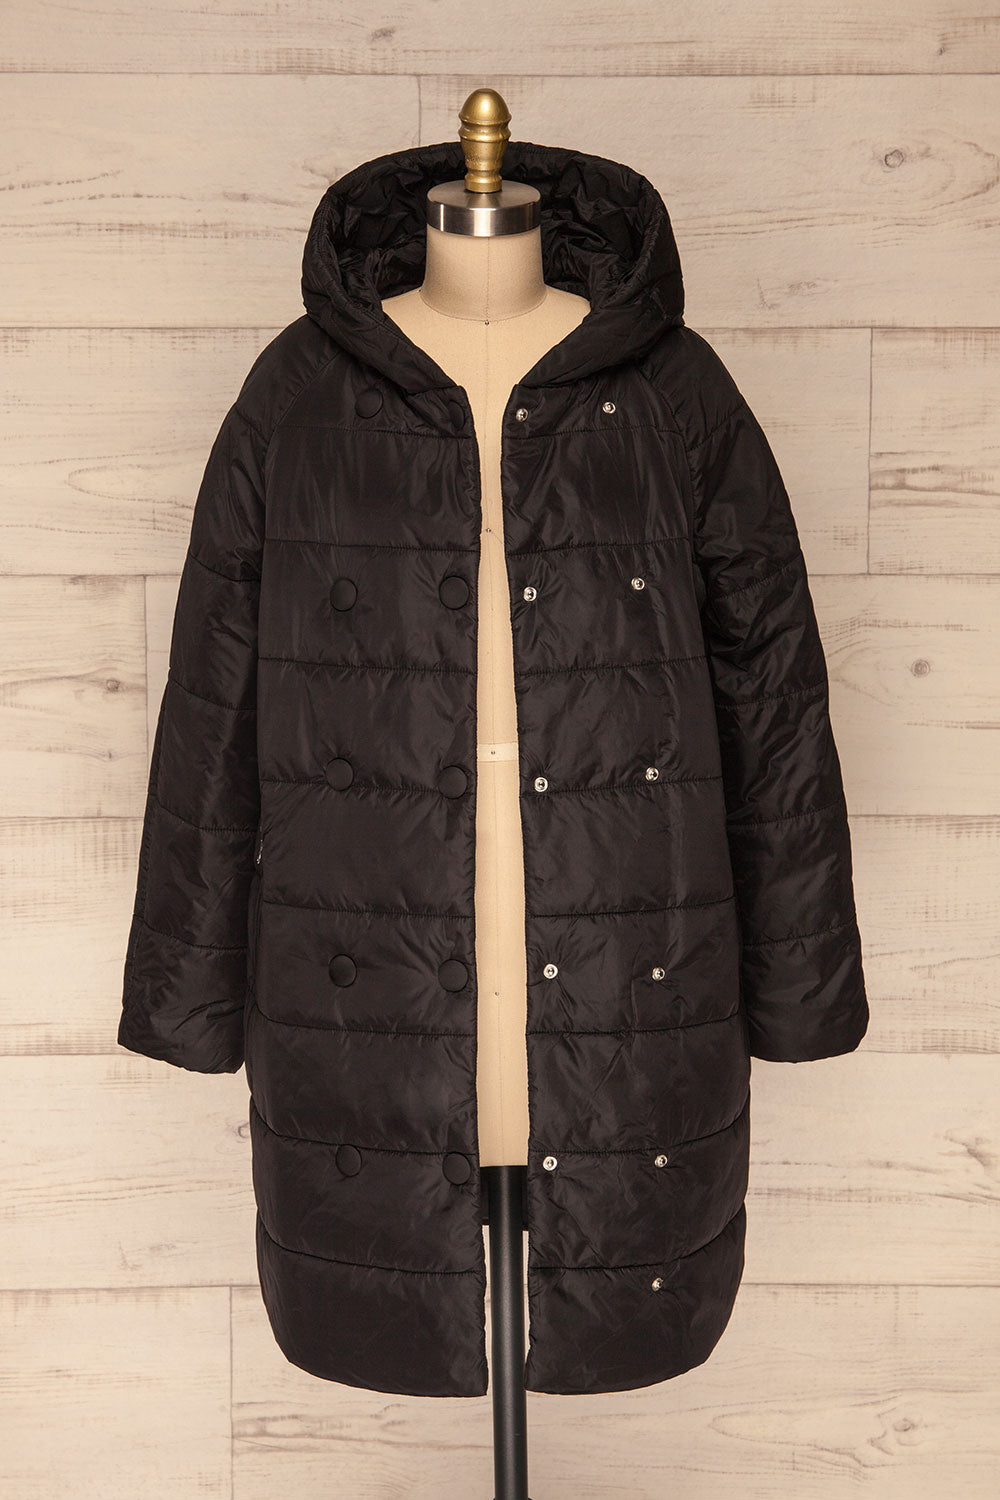 Matviy Night Black Quilted Coat with Hood | La Petite Garçonne front view open 